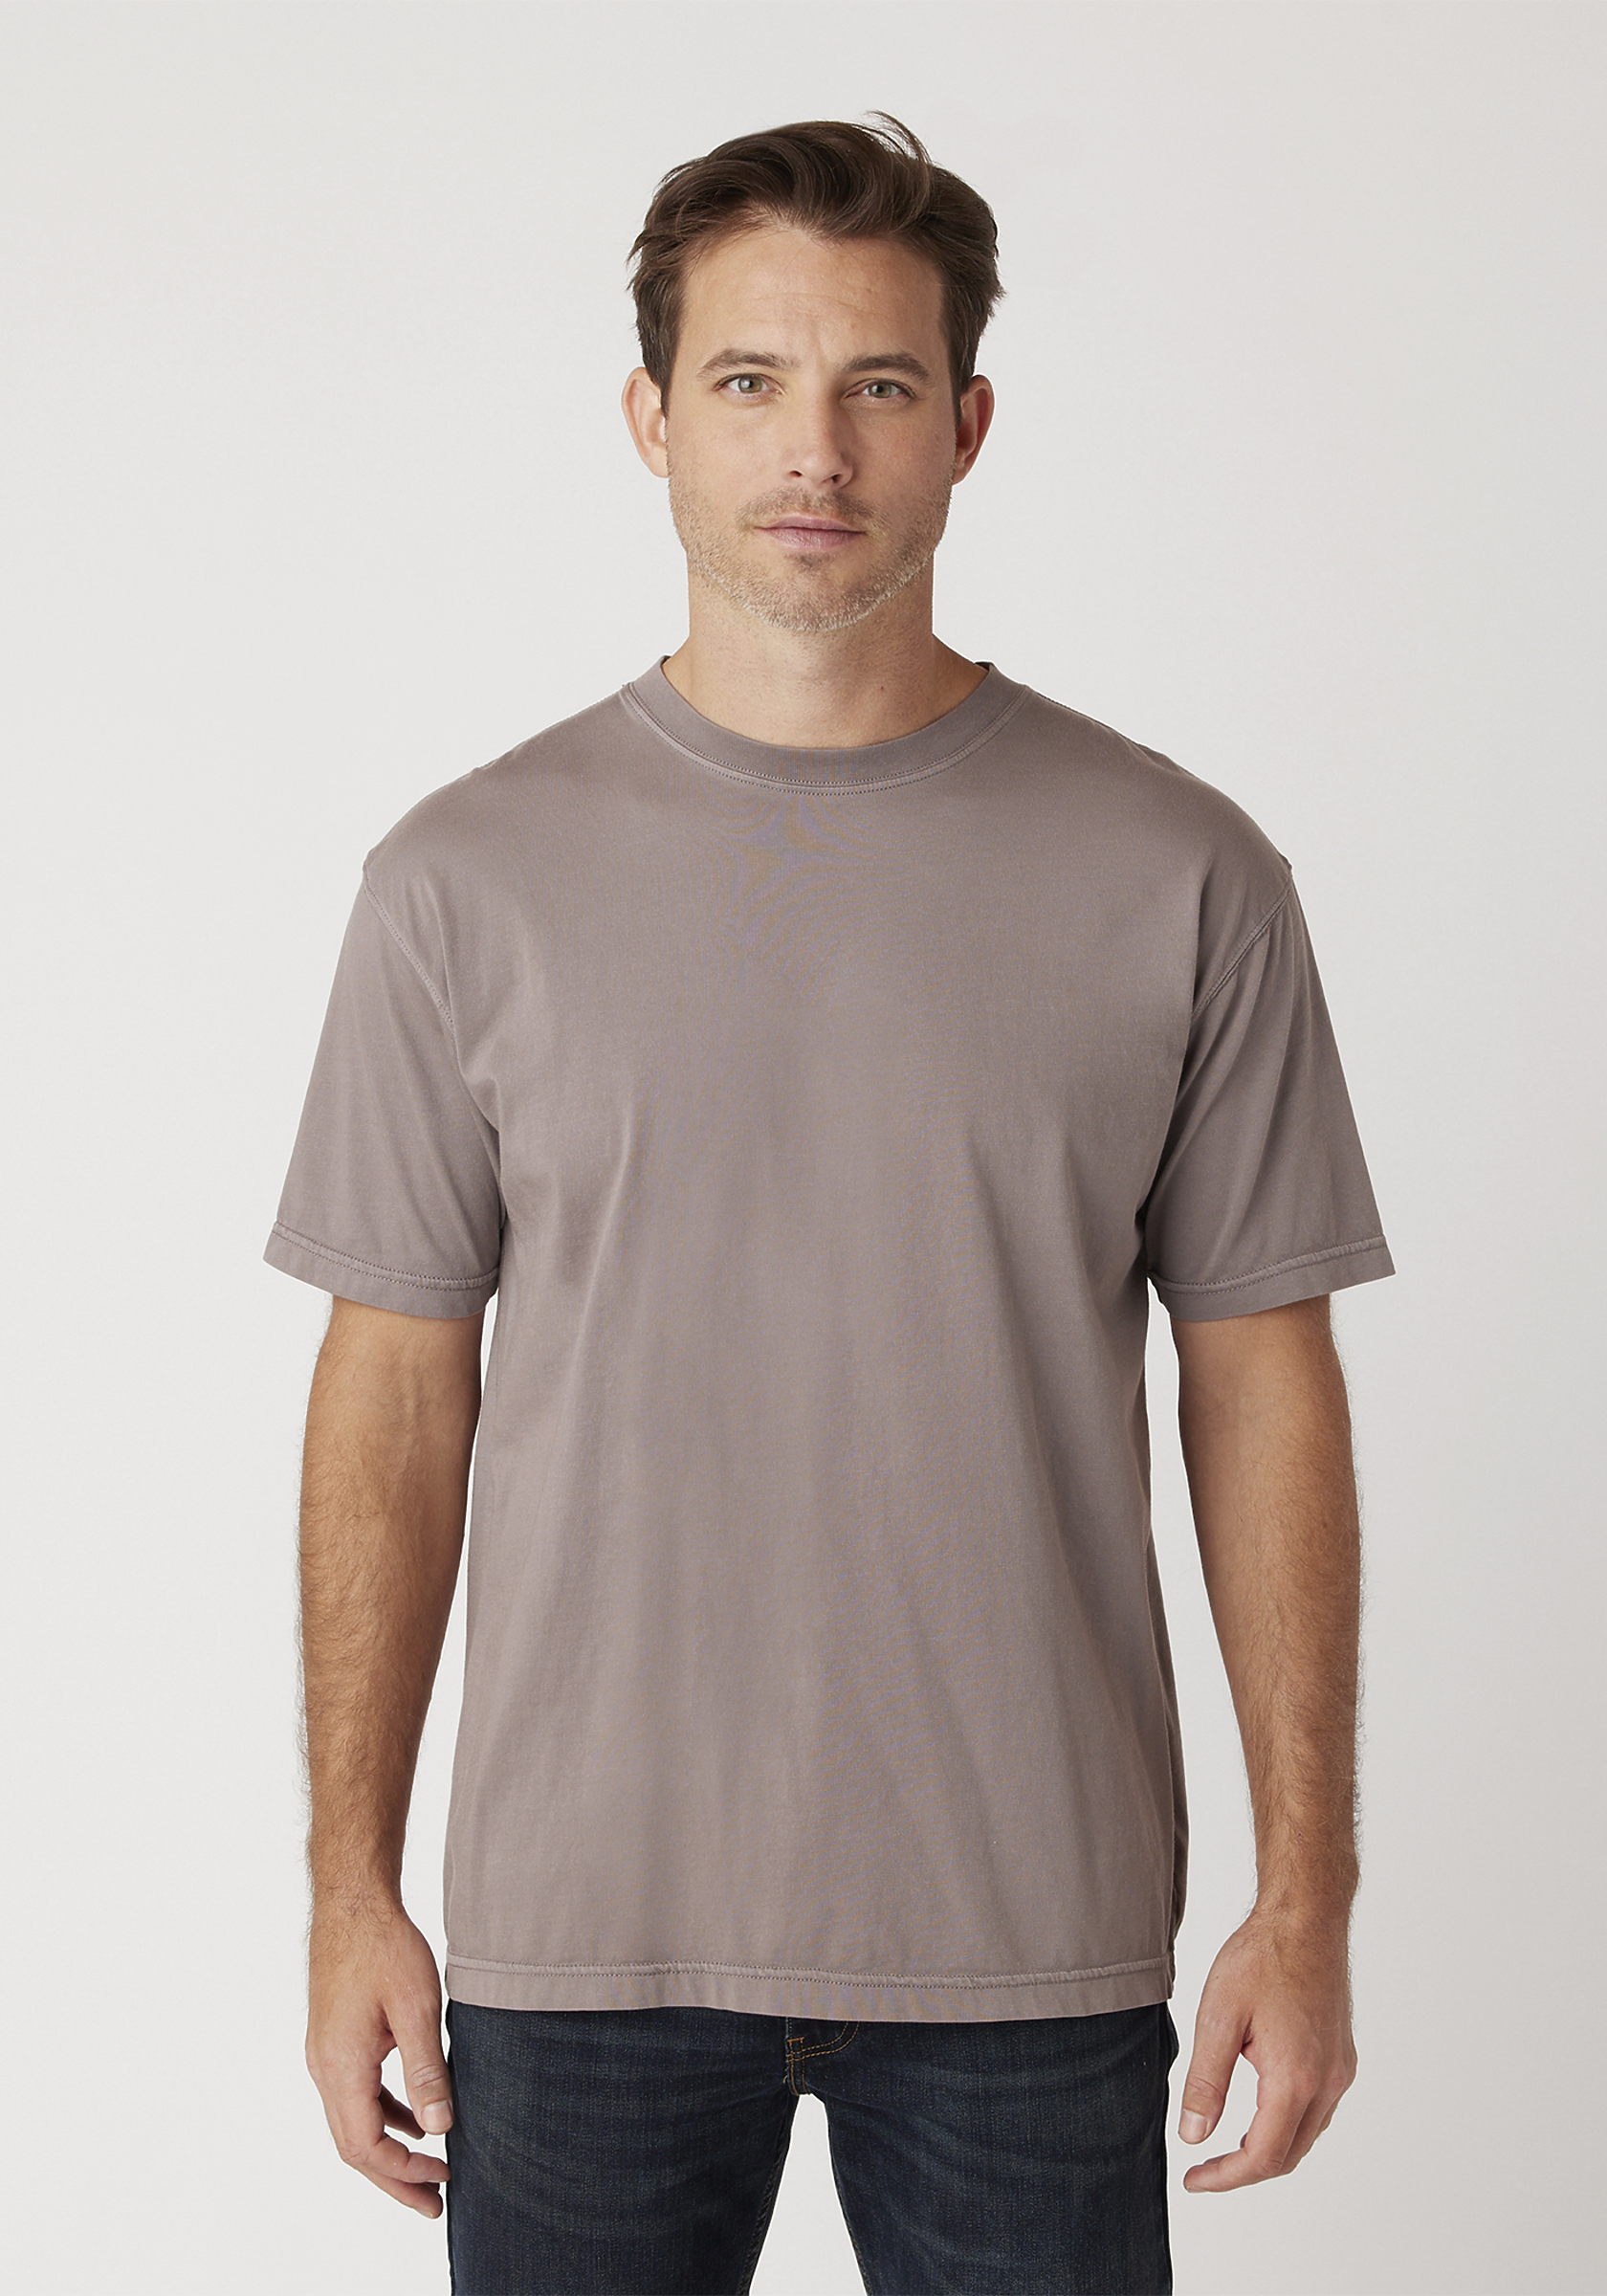 mens no boundaries black Size 2x Short Sleeve tee shirt